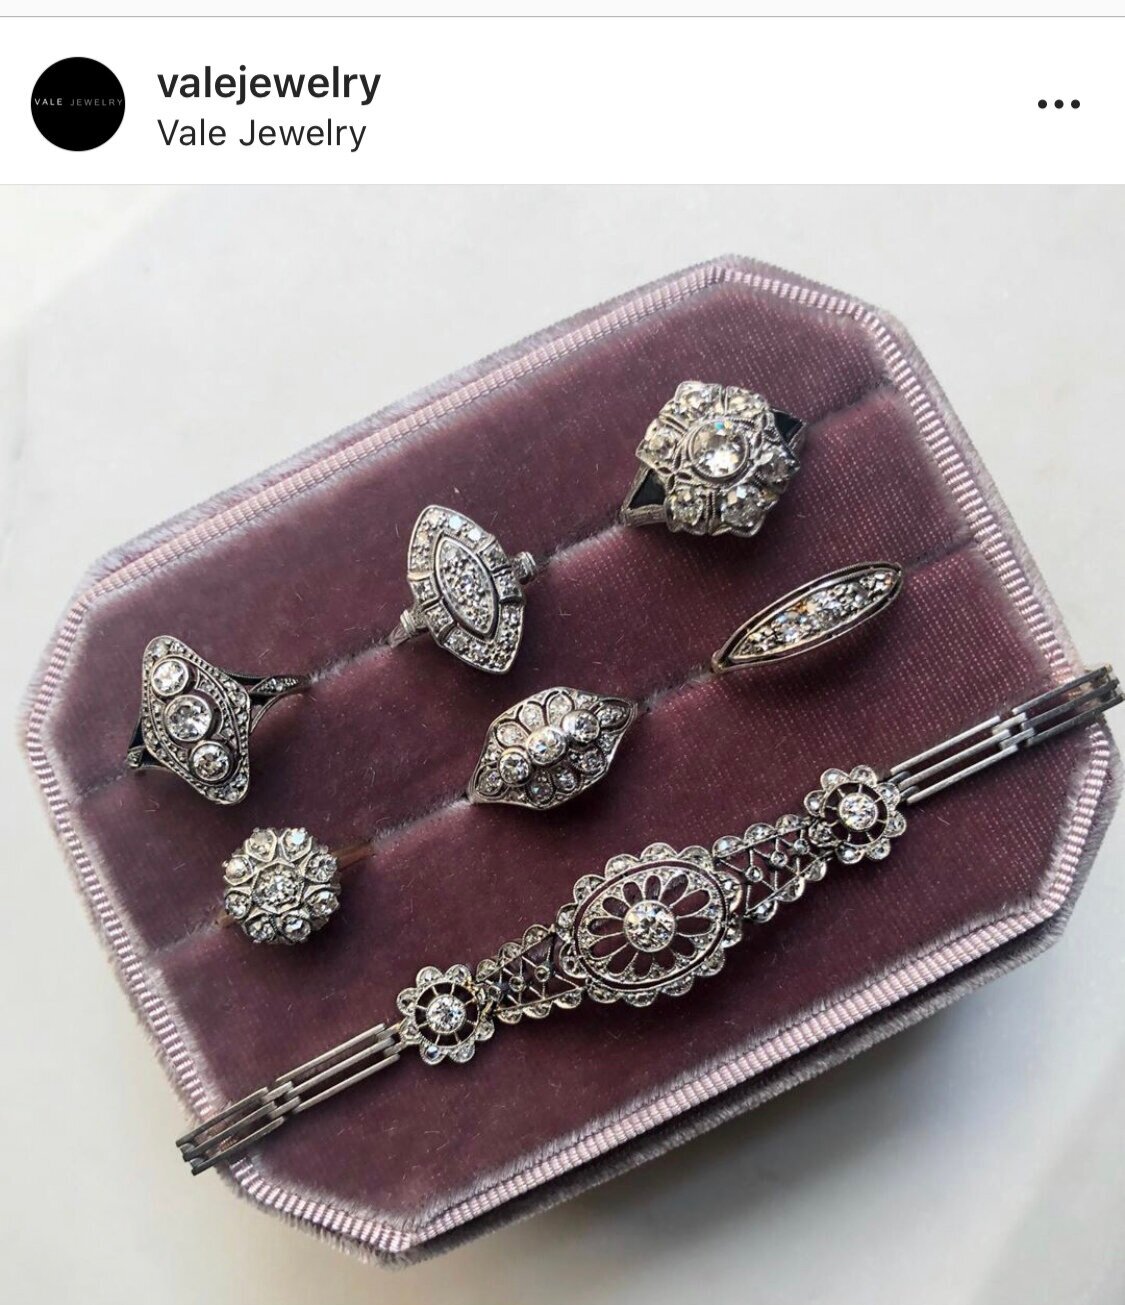 Vale Jewelry